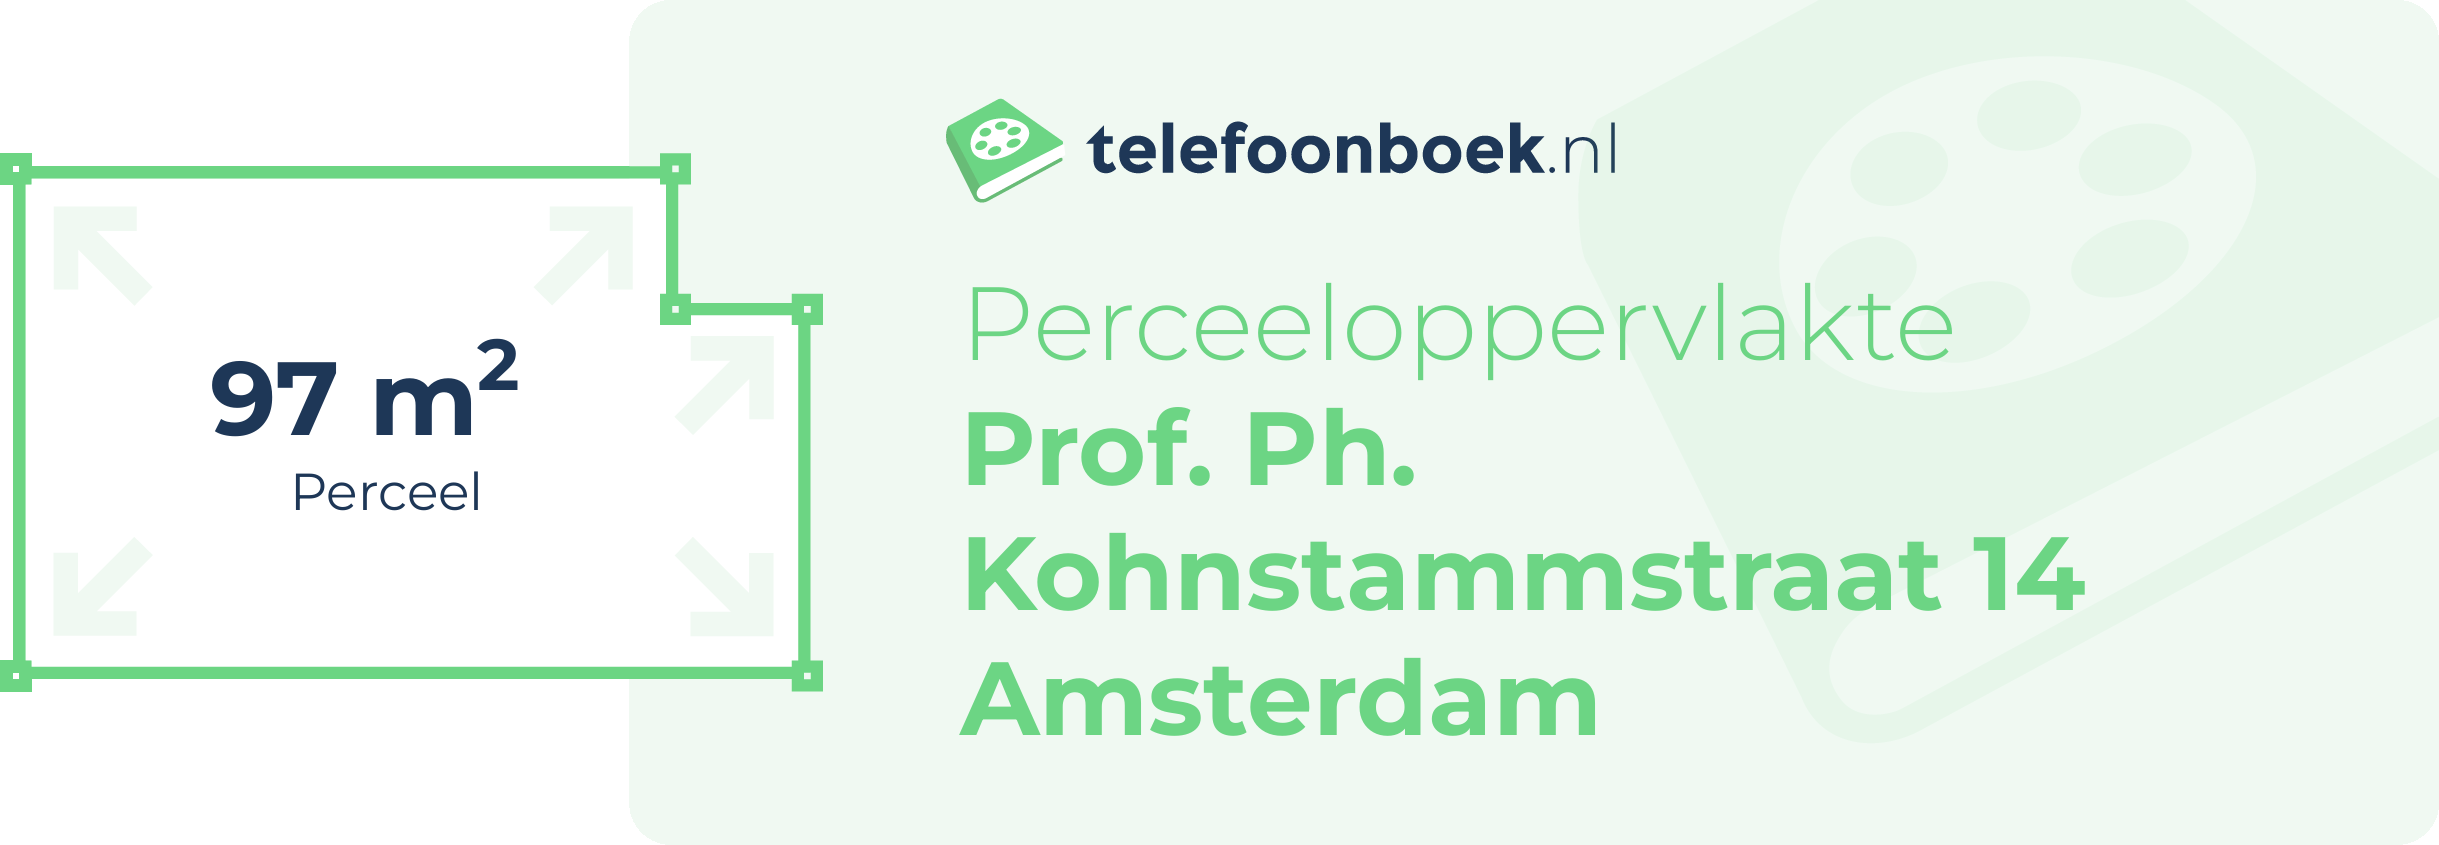 Perceeloppervlakte Prof. Ph. Kohnstammstraat 14 Amsterdam